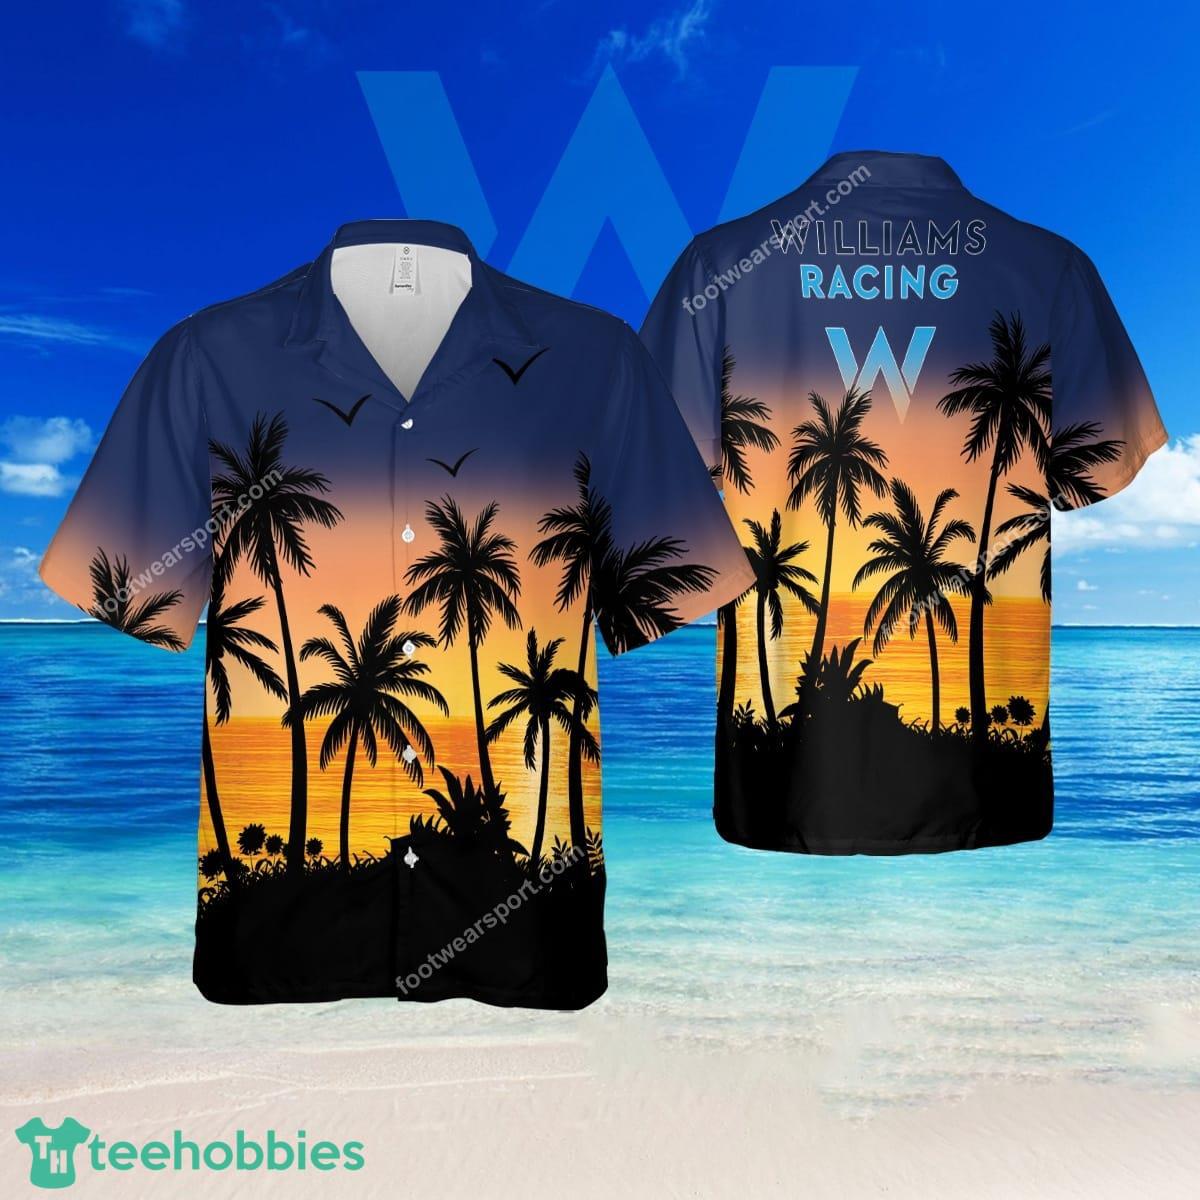 F1 Racing Williams Racing Top Brand New All Over Print Hawaiian Shirt Gift For Fans - F1 Racing Williams Racing Top Brand New All Over Print Hawaiian Shirt Gift For Fans